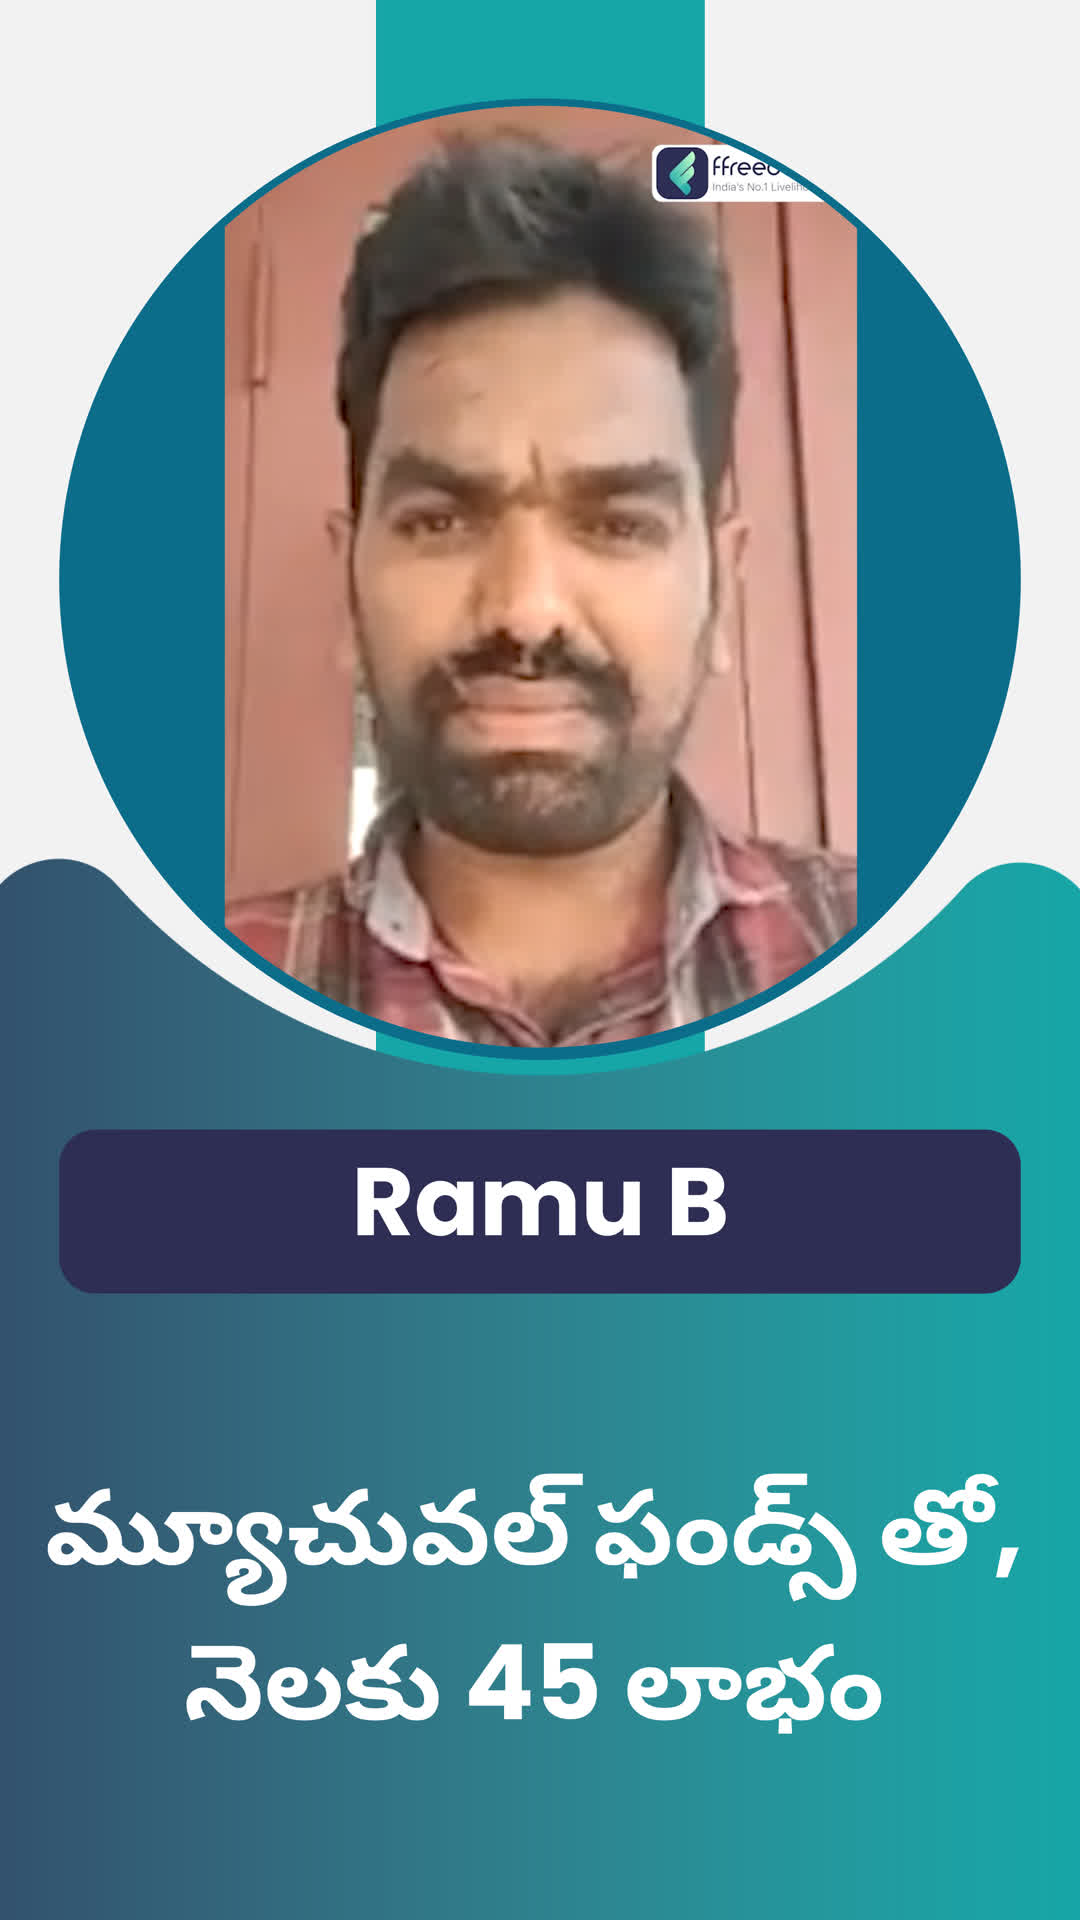 ramu's Honest Review of ffreedom app - West Godavari ,Andhra Pradesh